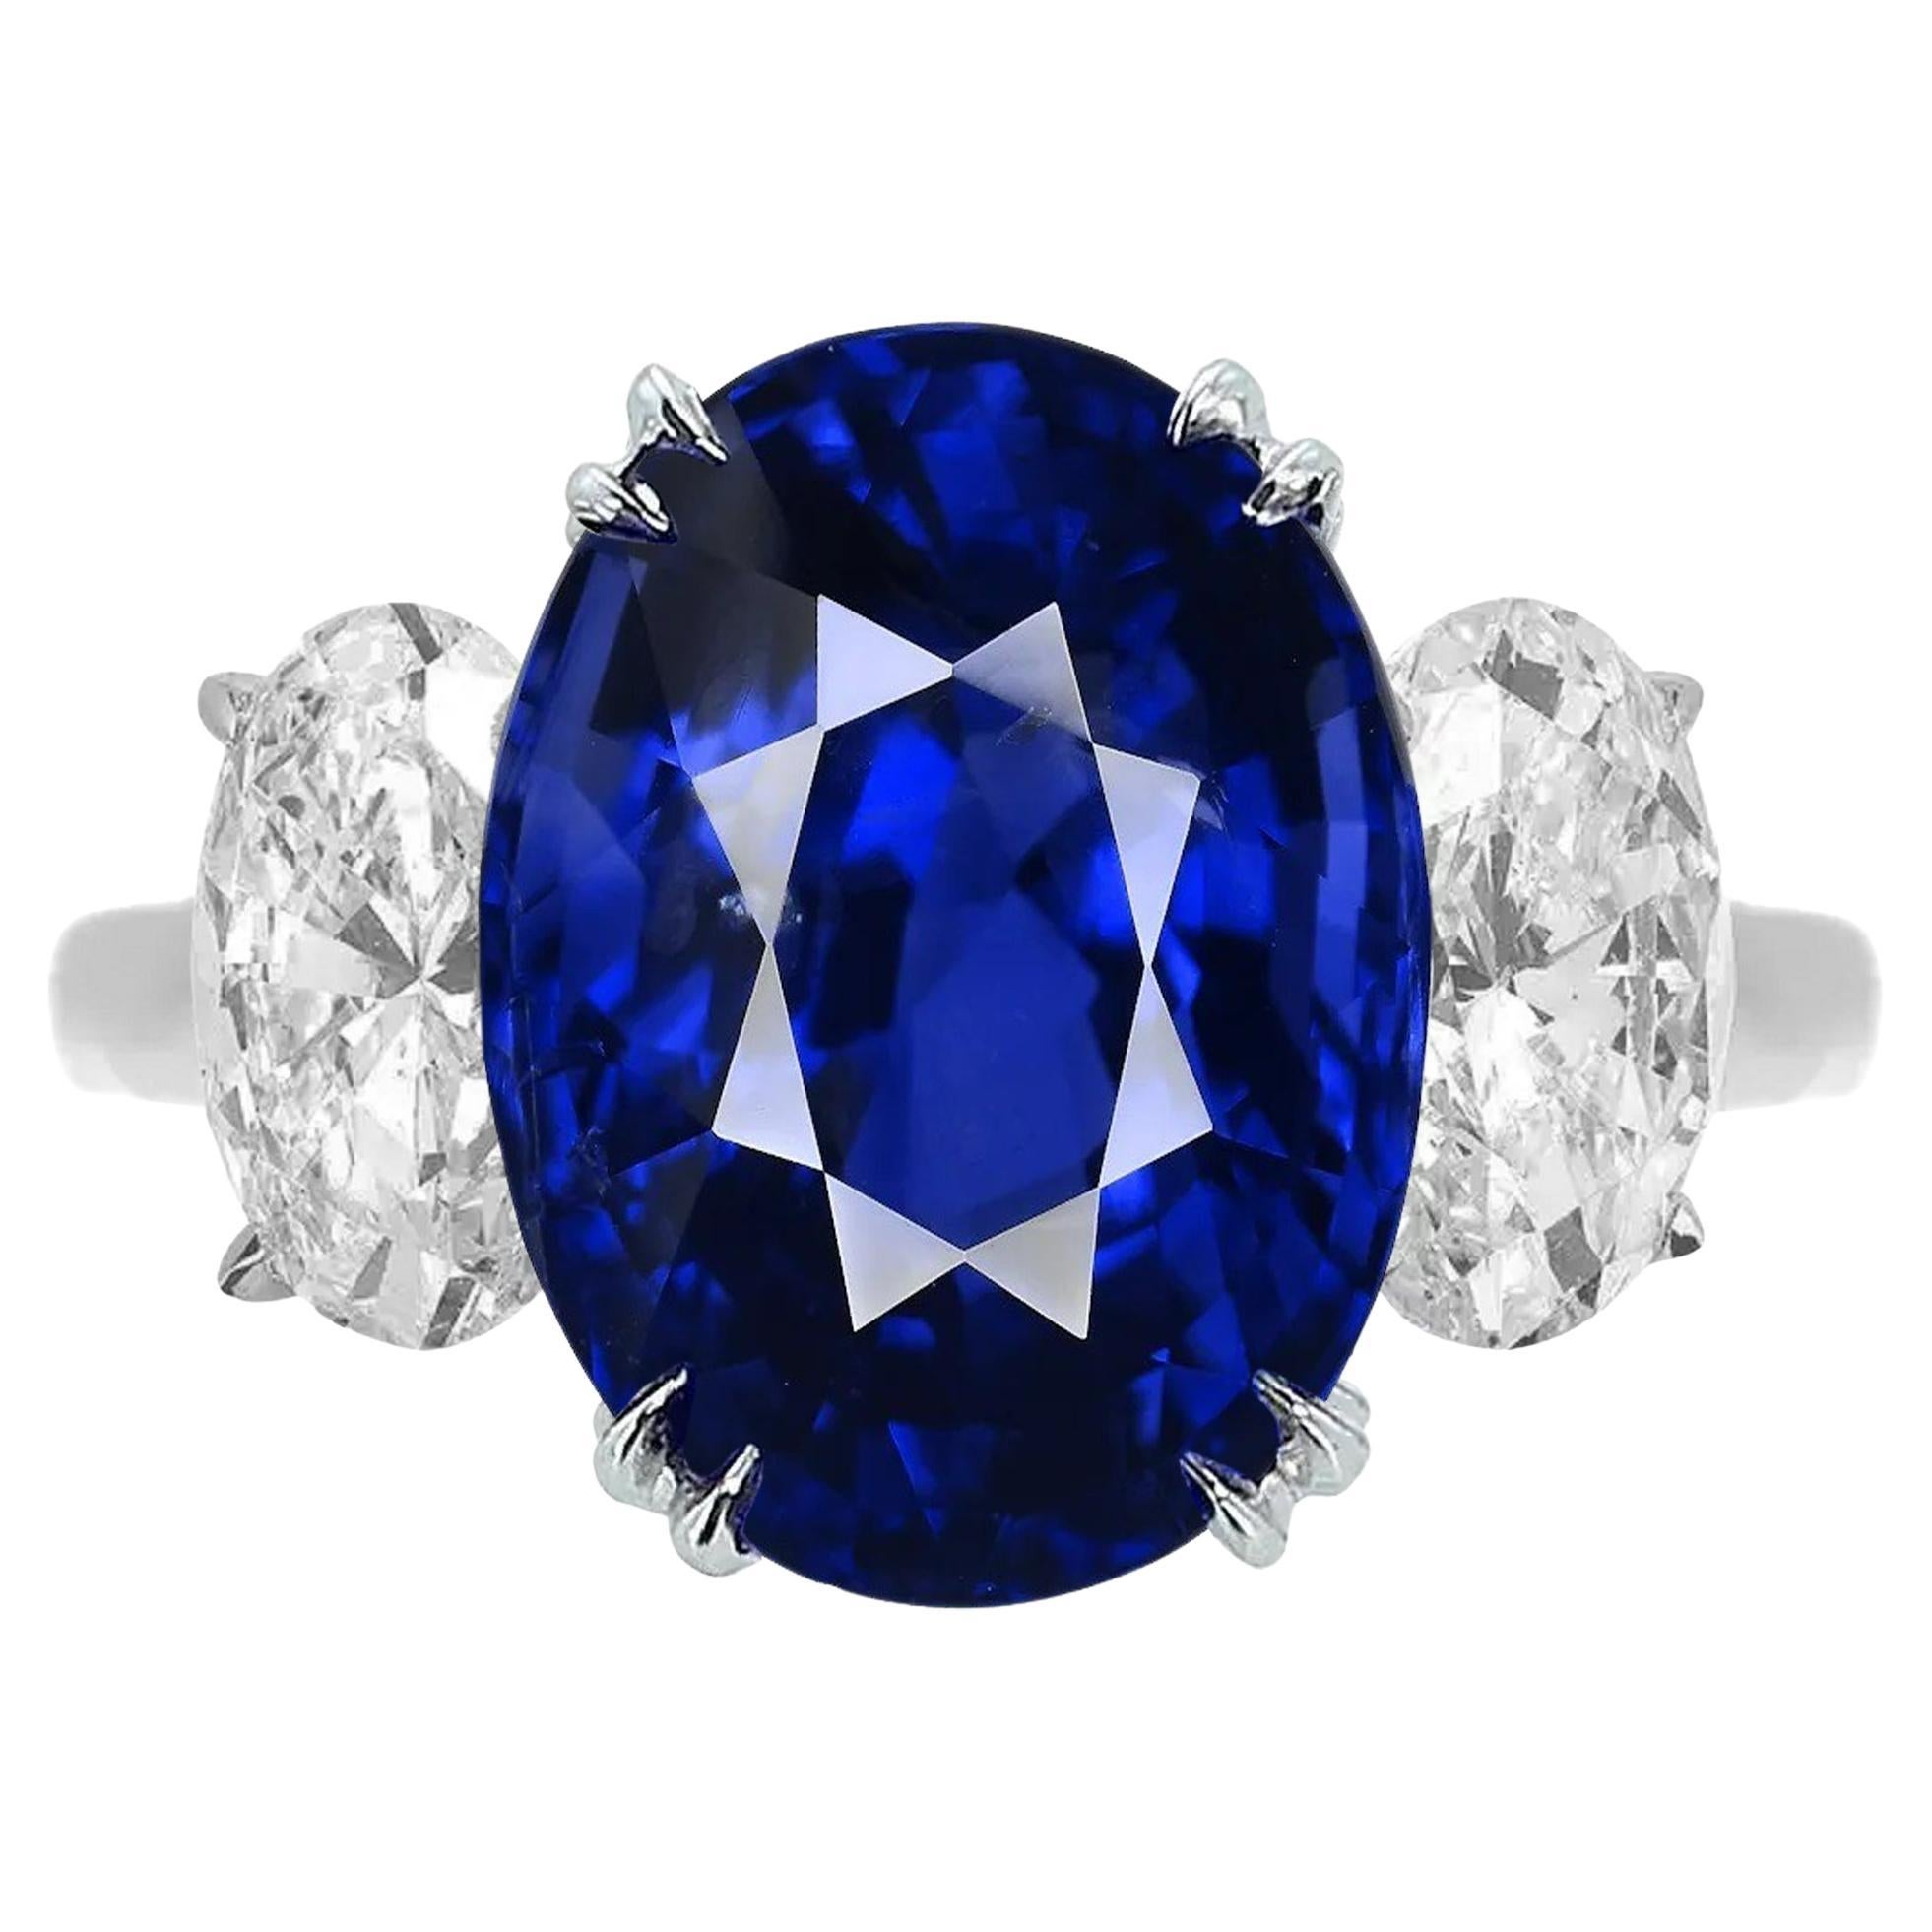 GIA GRS CEYLON NO HEAT Certified 4 Carat Blue Sapphire Diamond Ring For Sale